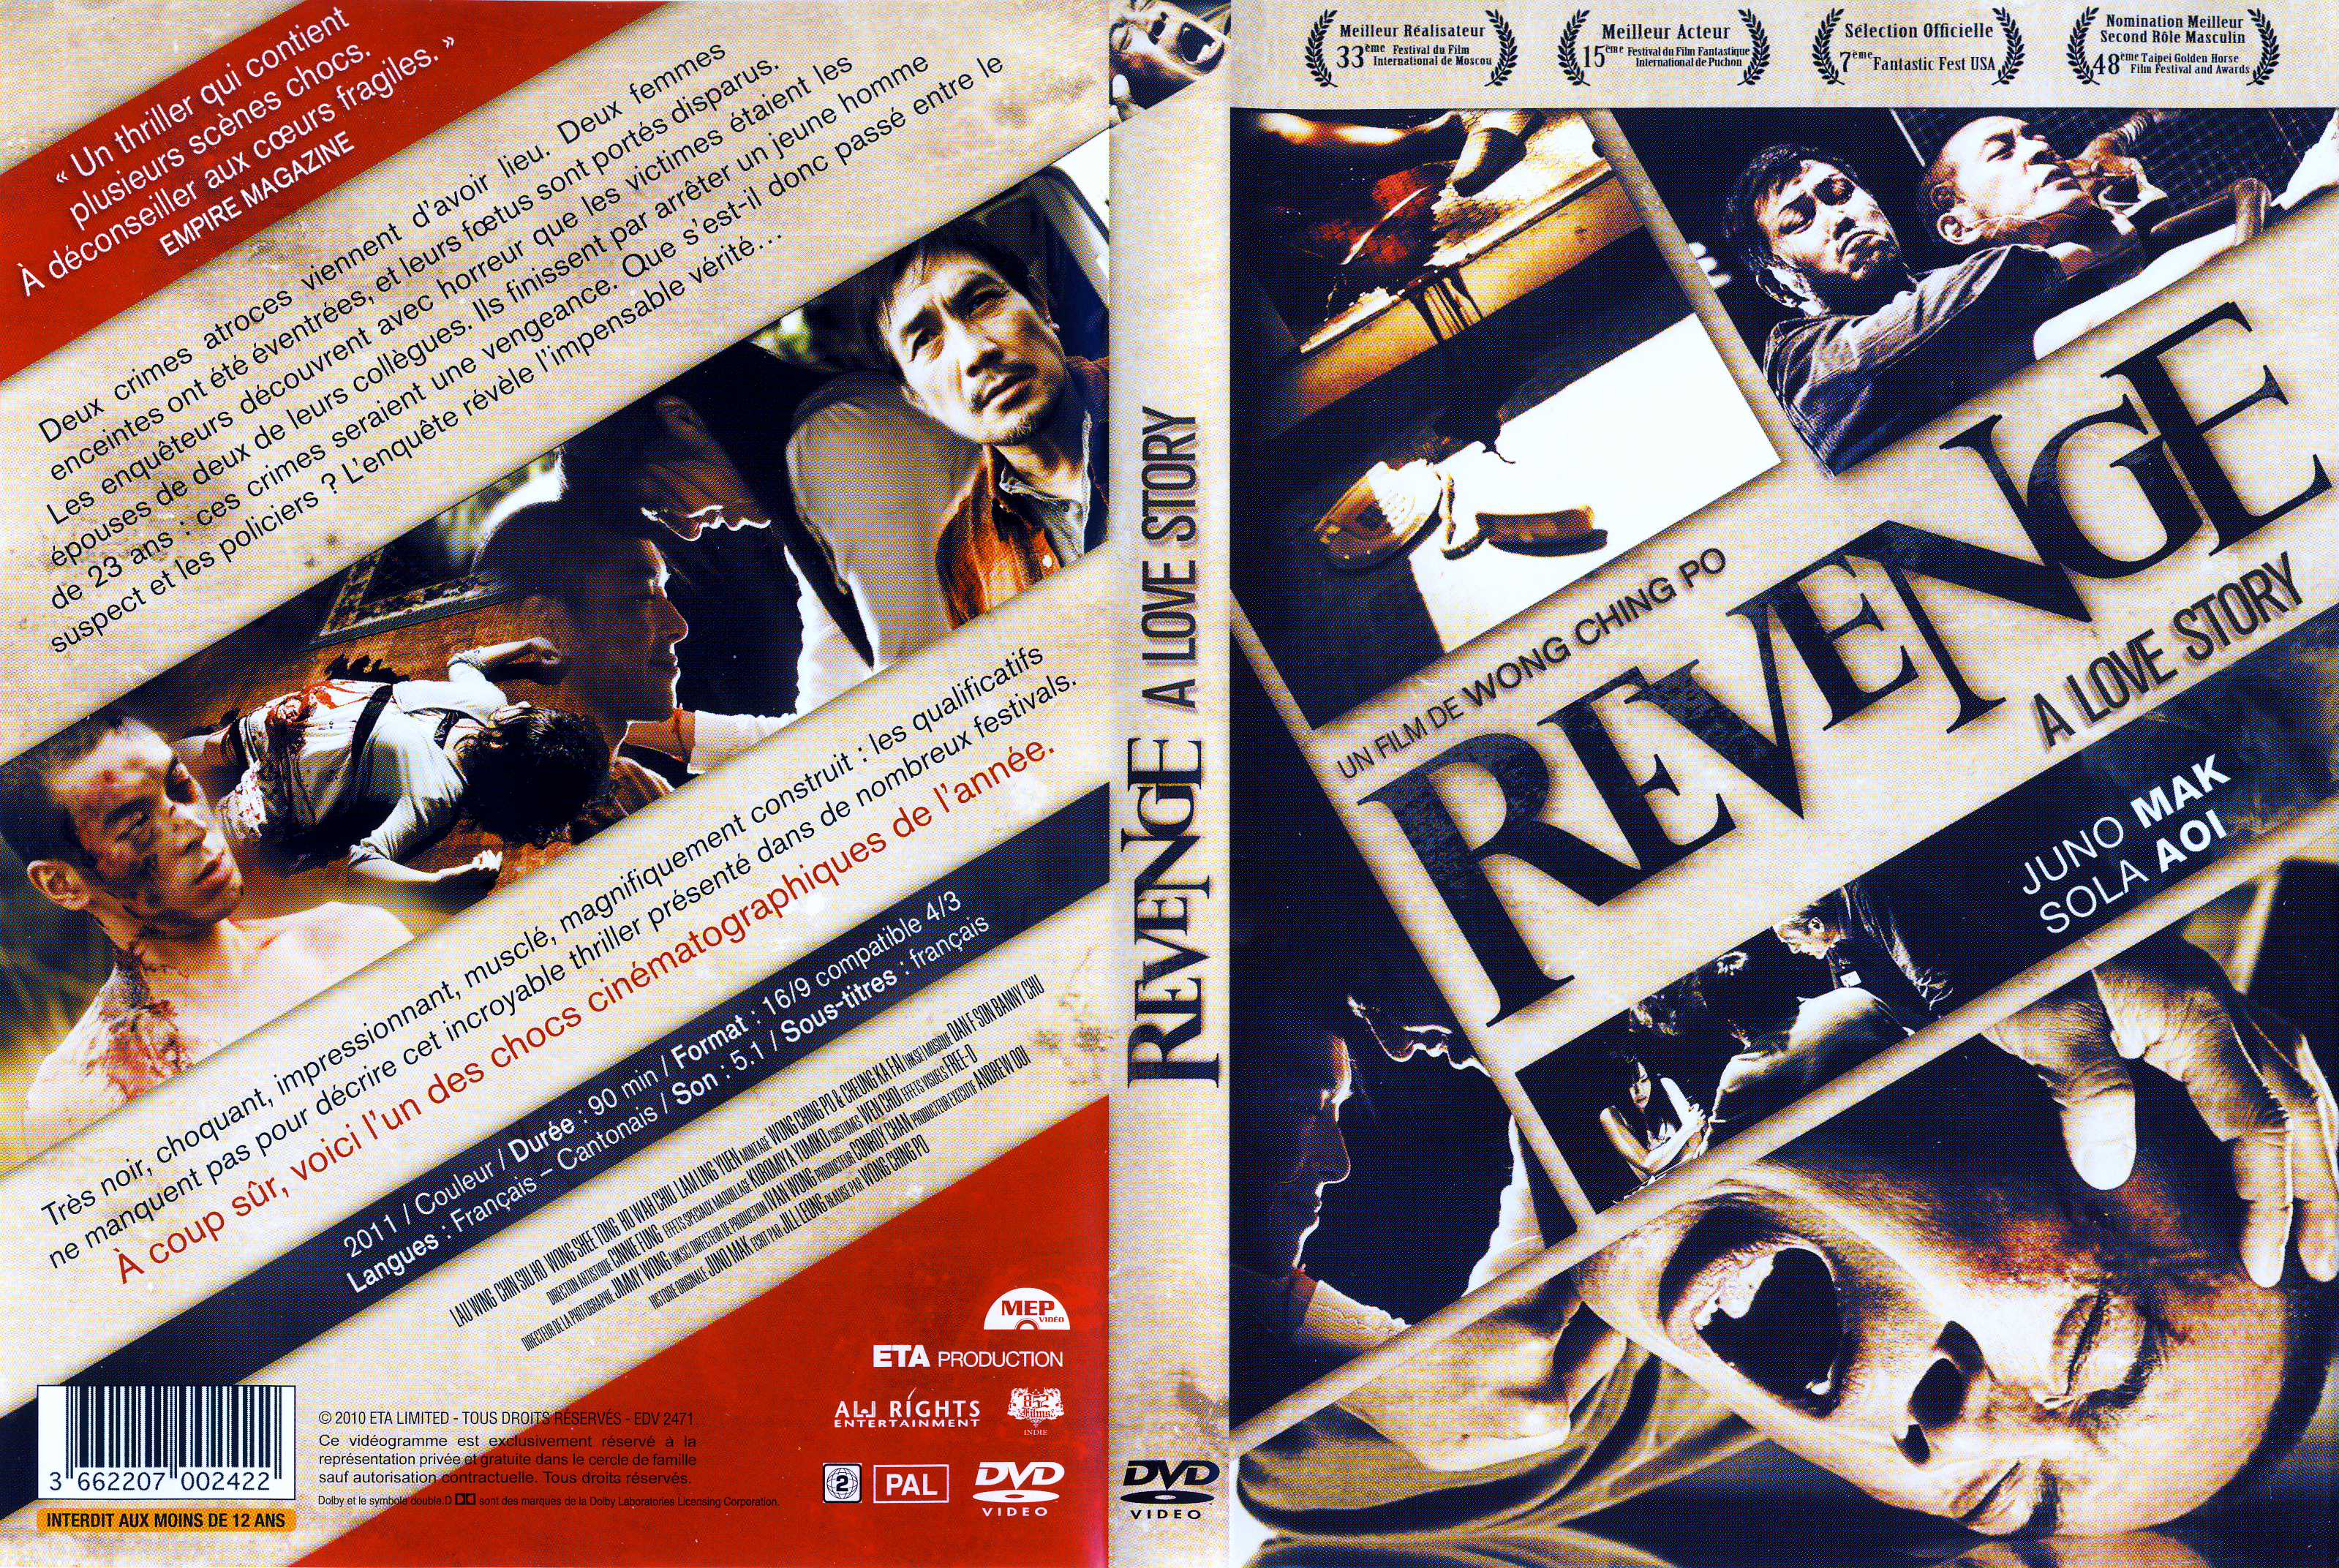 Jaquette DVD Revenge: A love story